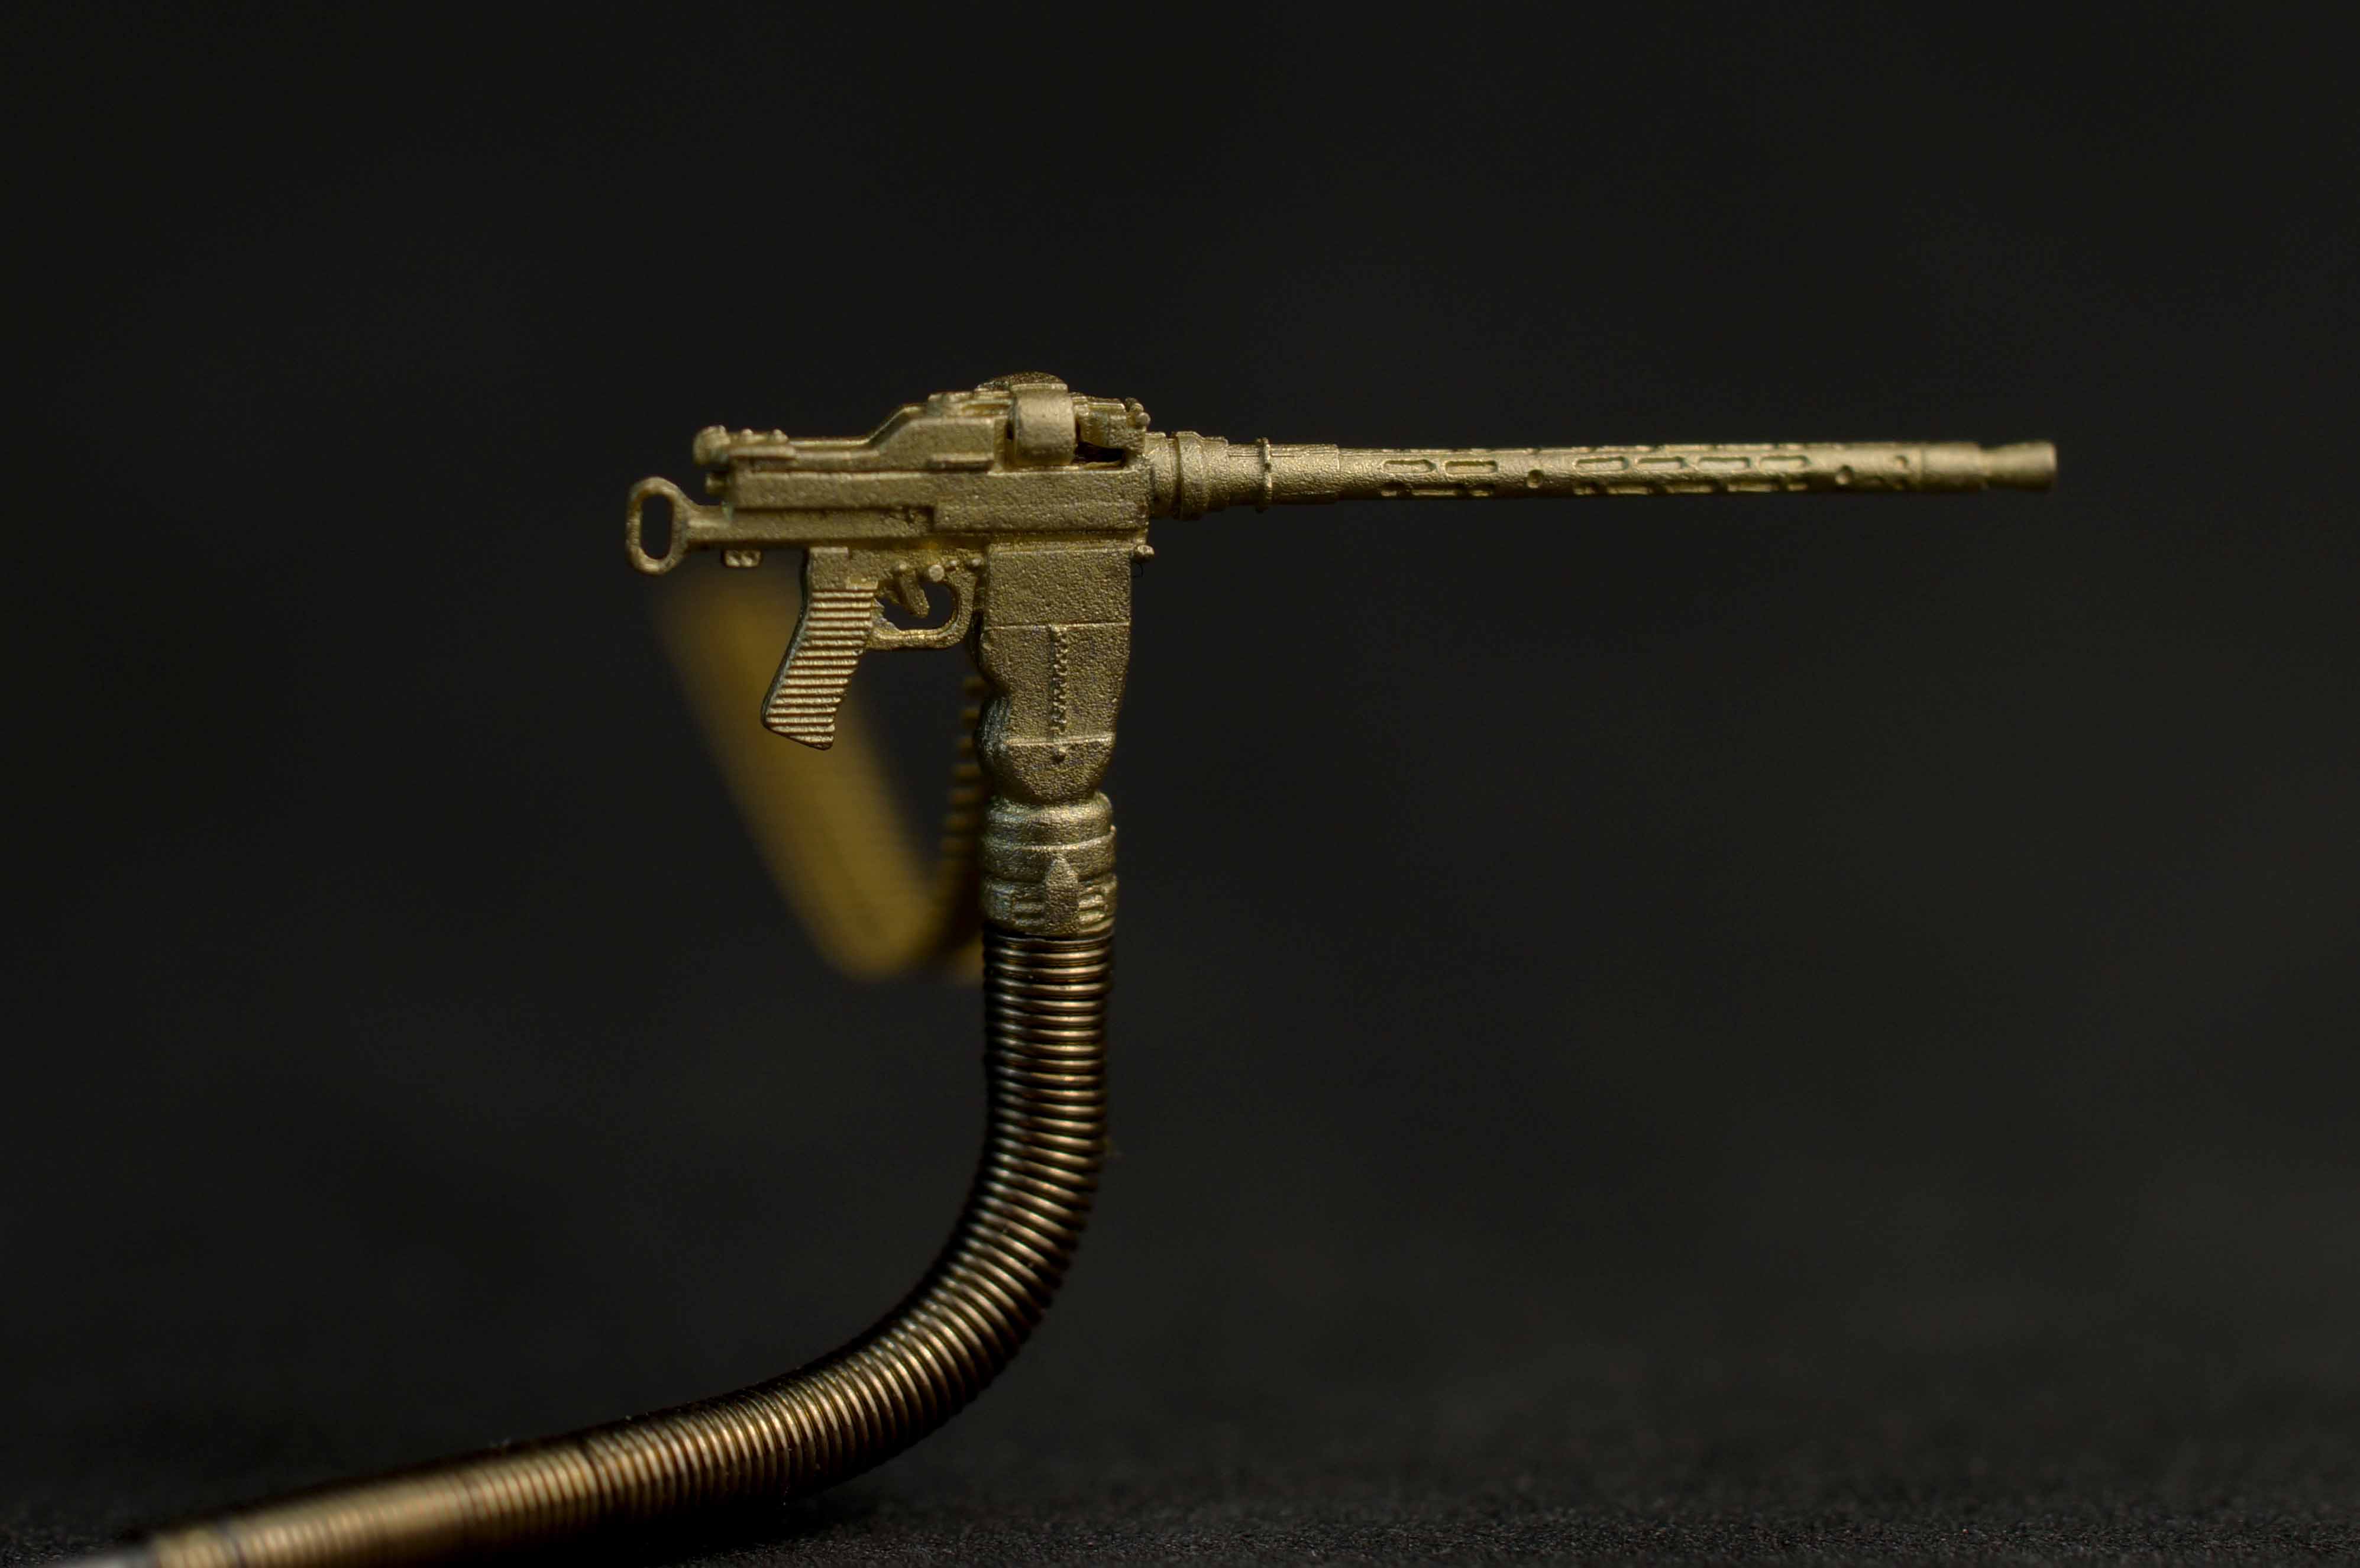 1/48 MG 81 machine gun